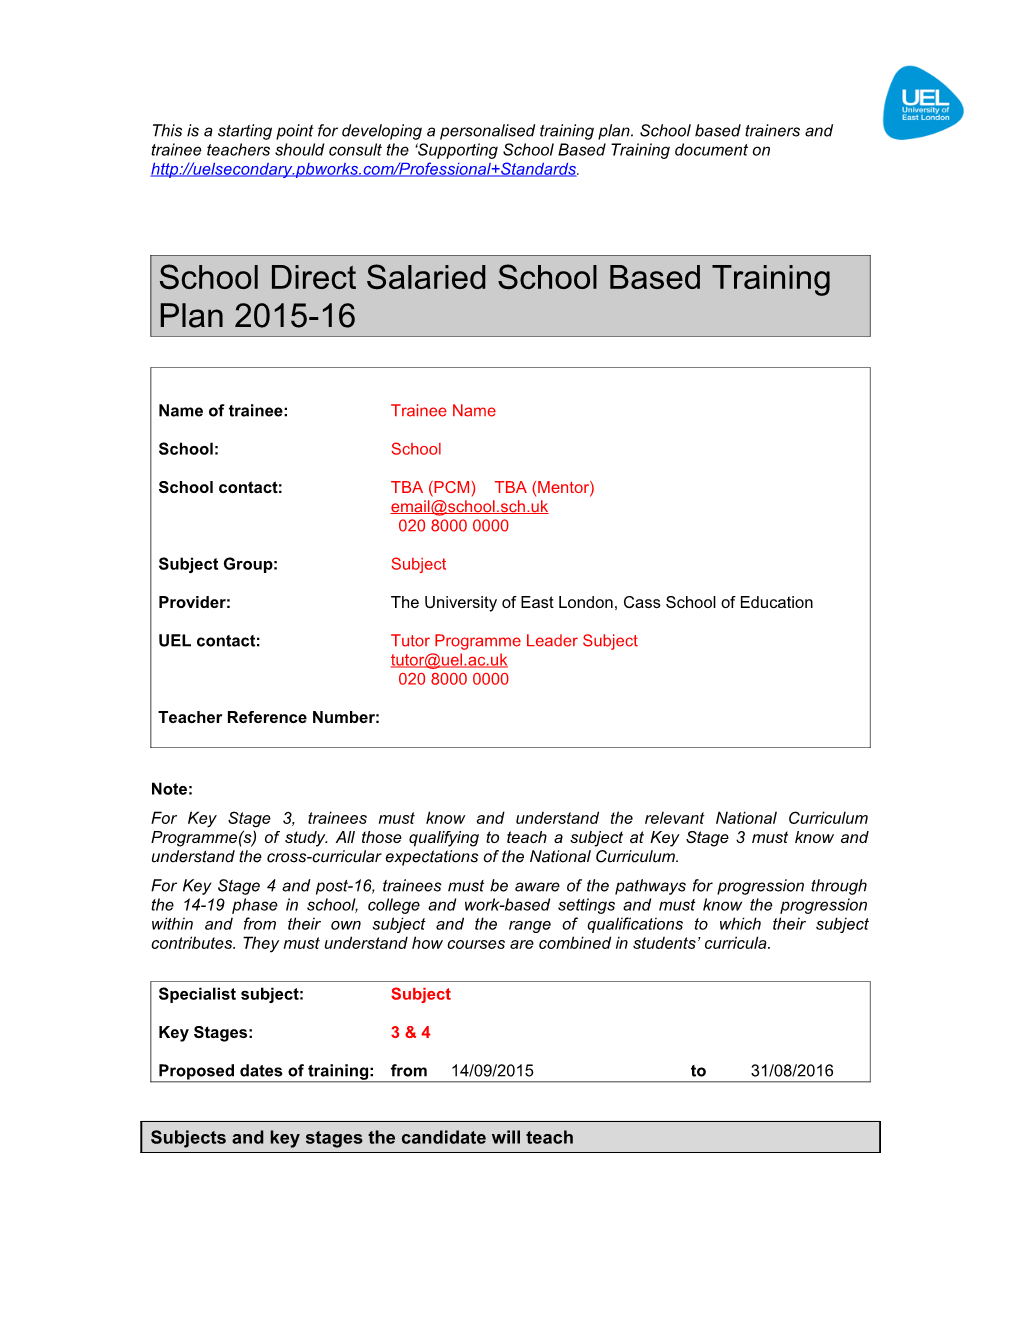 School Direct Salariedschool Based Training Plan 2015-16